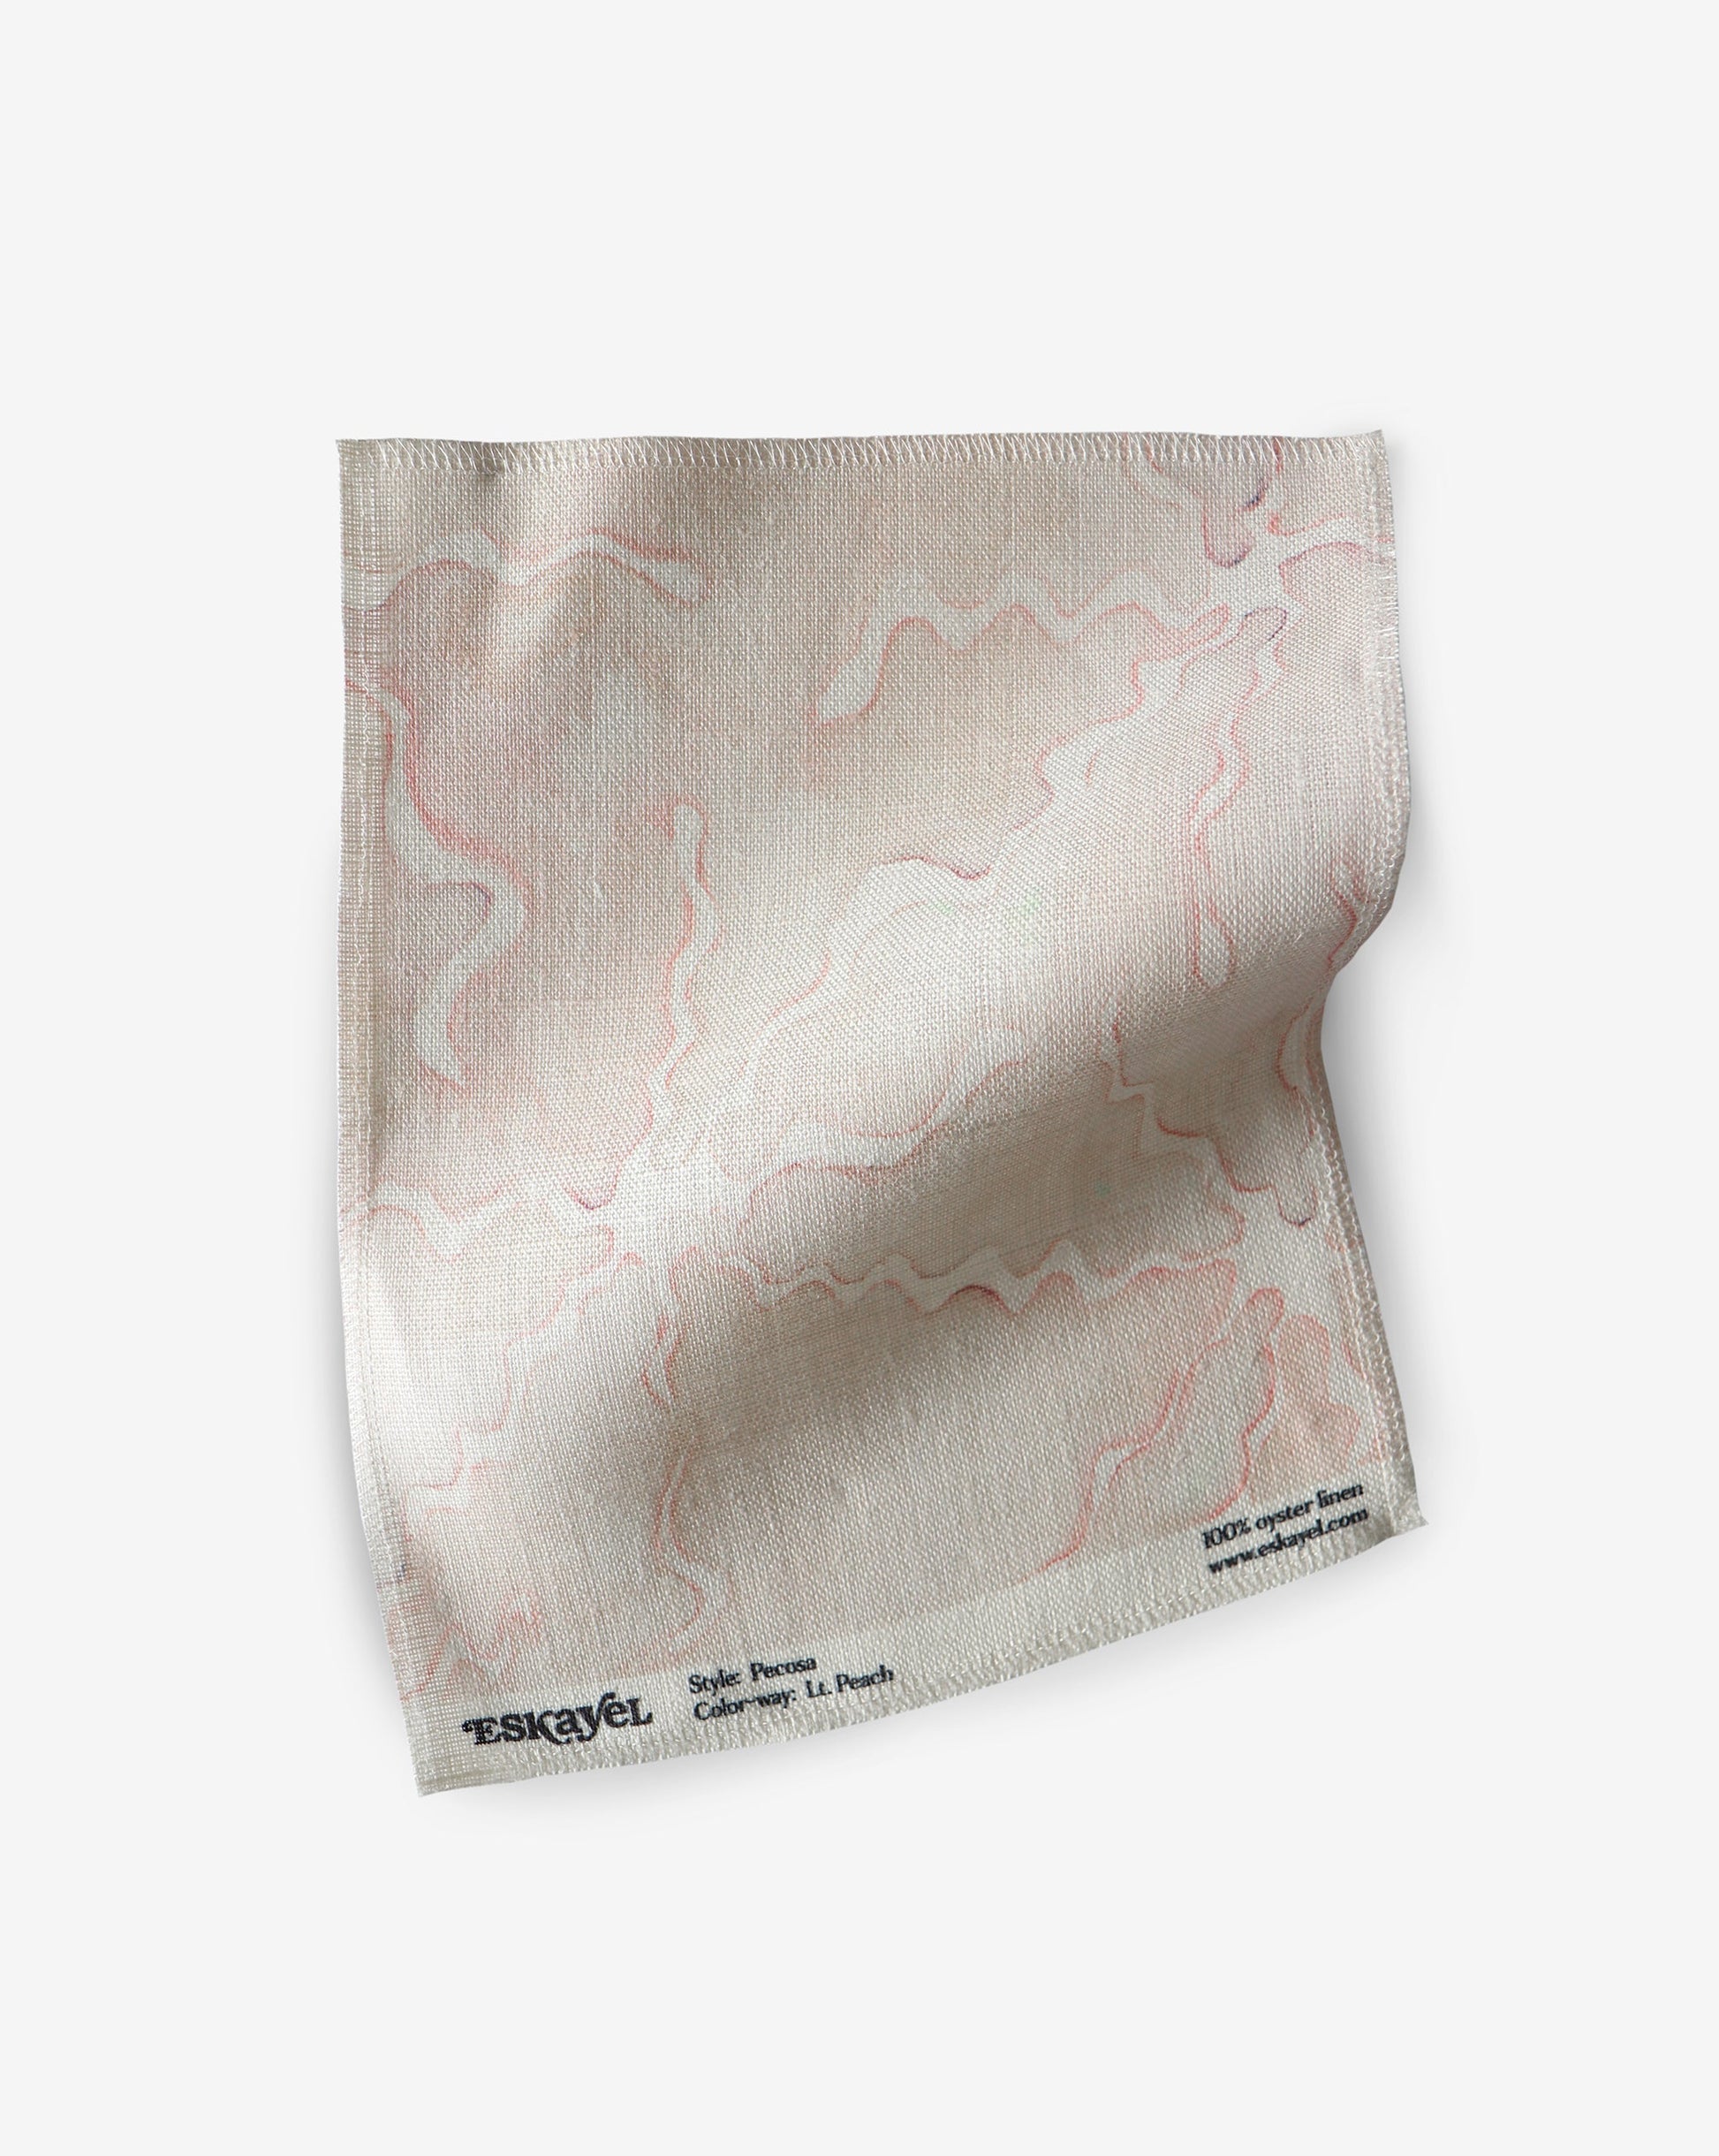 A Pecosa Fabric||Light Peach handkerchief made of fabric on a white surface.